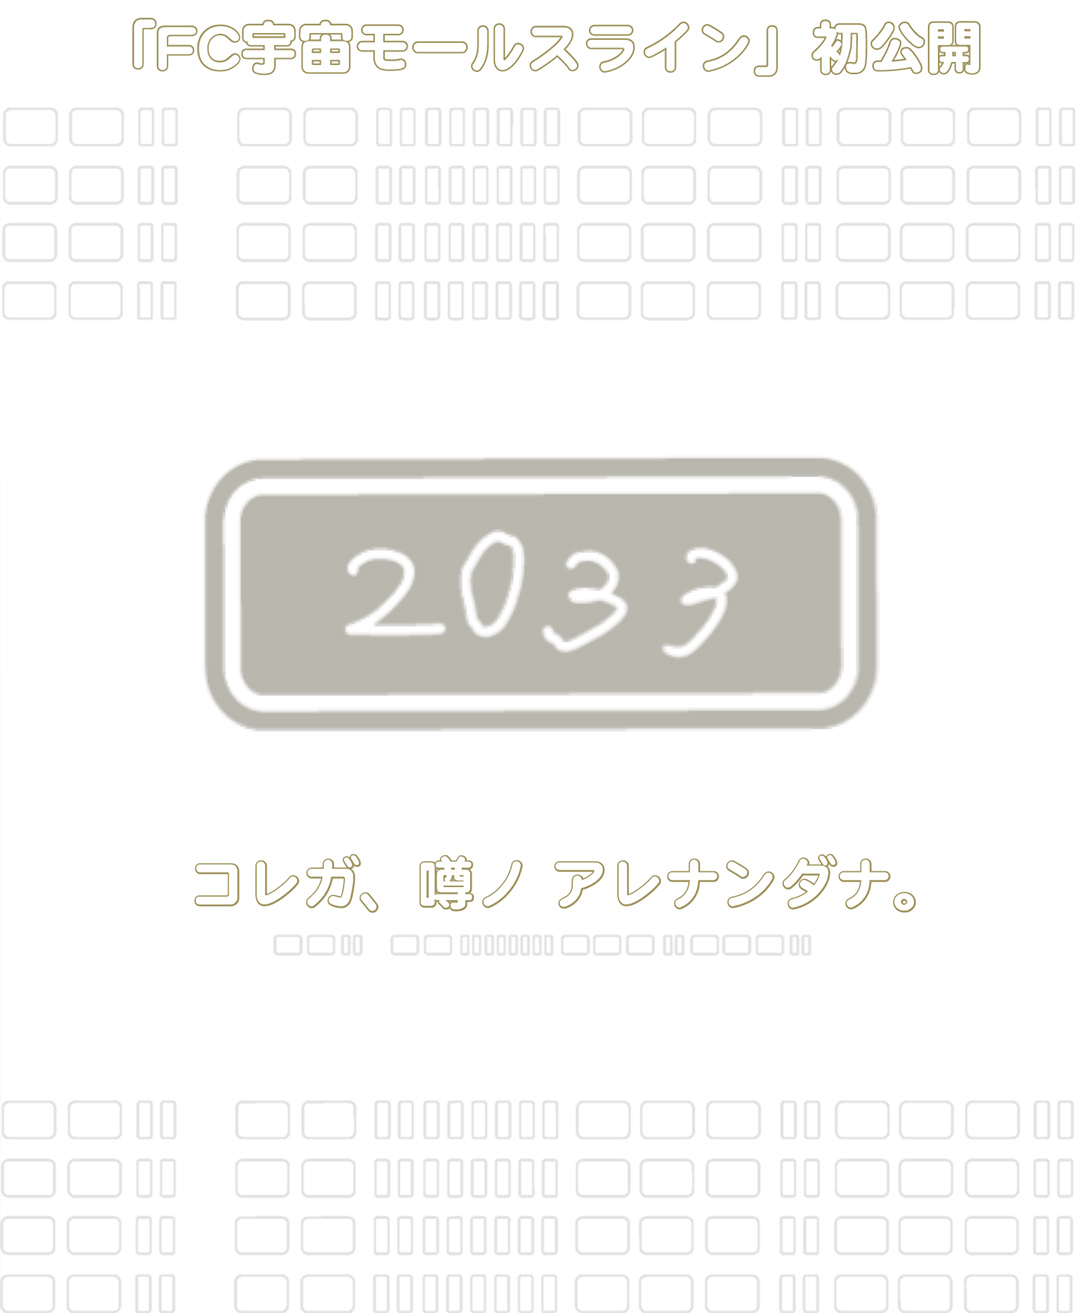 「FC宇宙モールスライン」初公開|2033|コレガ、噂ノ ヤツナンダナ。